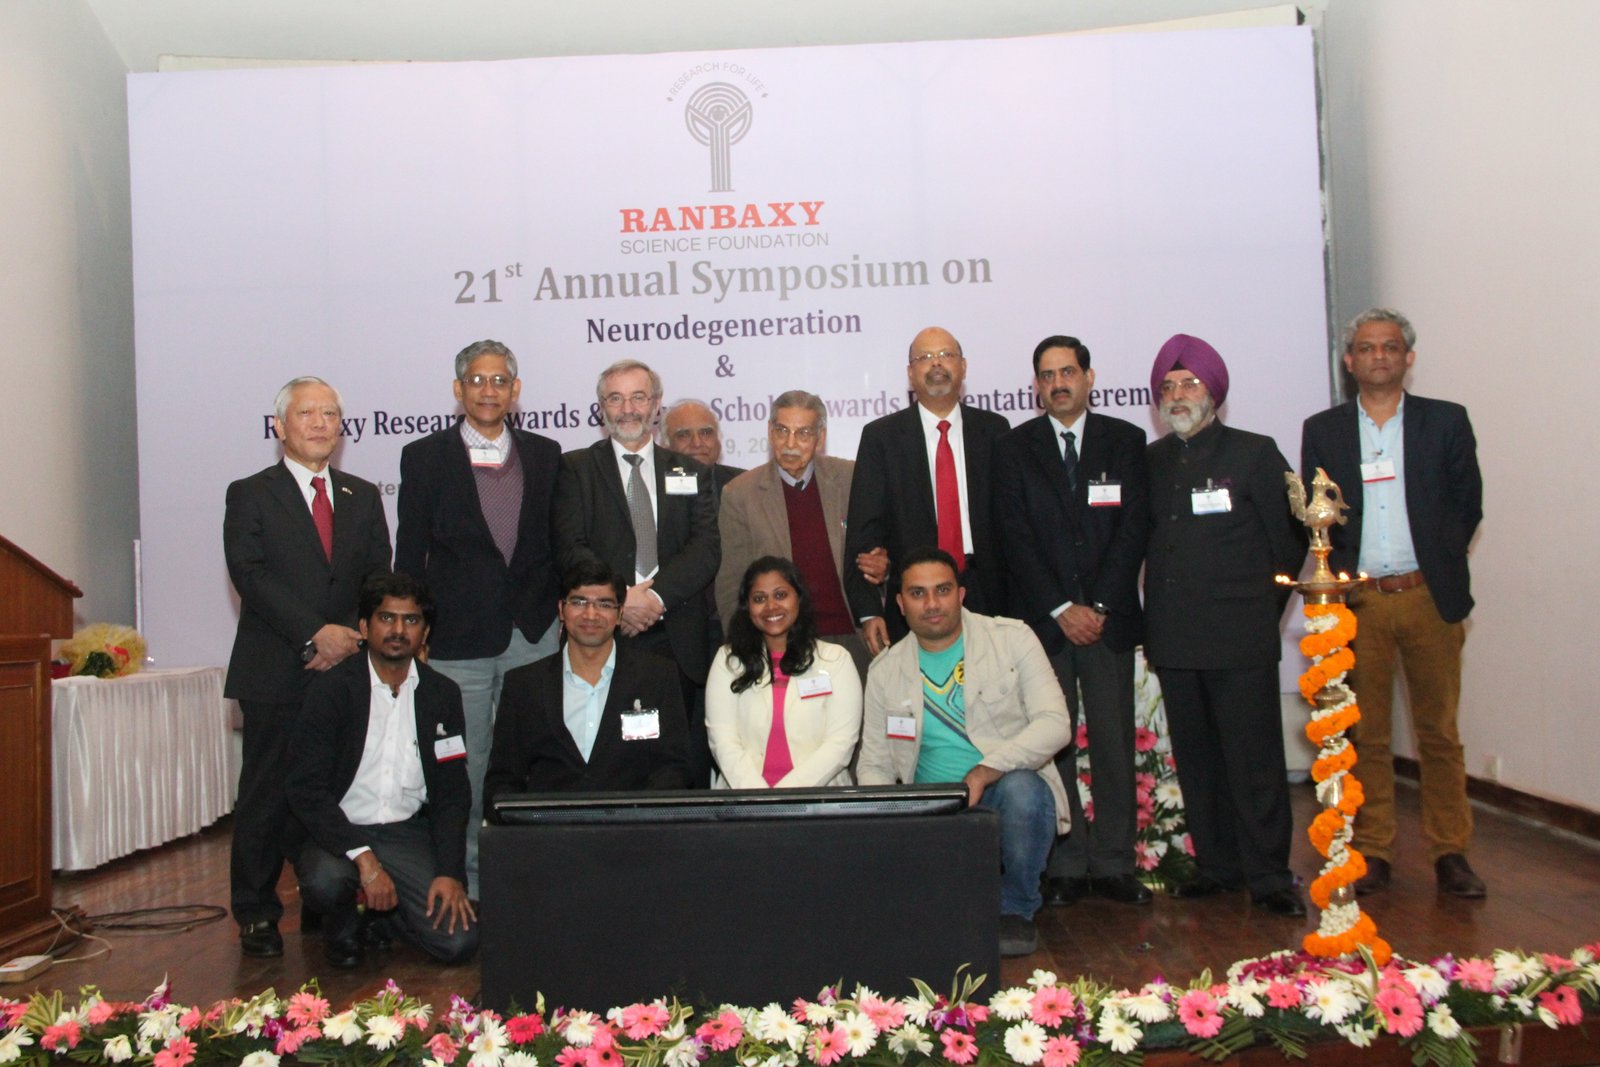 Ranbaxy awards deserving scholars. Preceding the award ceremony, Ranbaxy Science Foundation also held its 21st Annual Symposium on "Neurodegeneration"